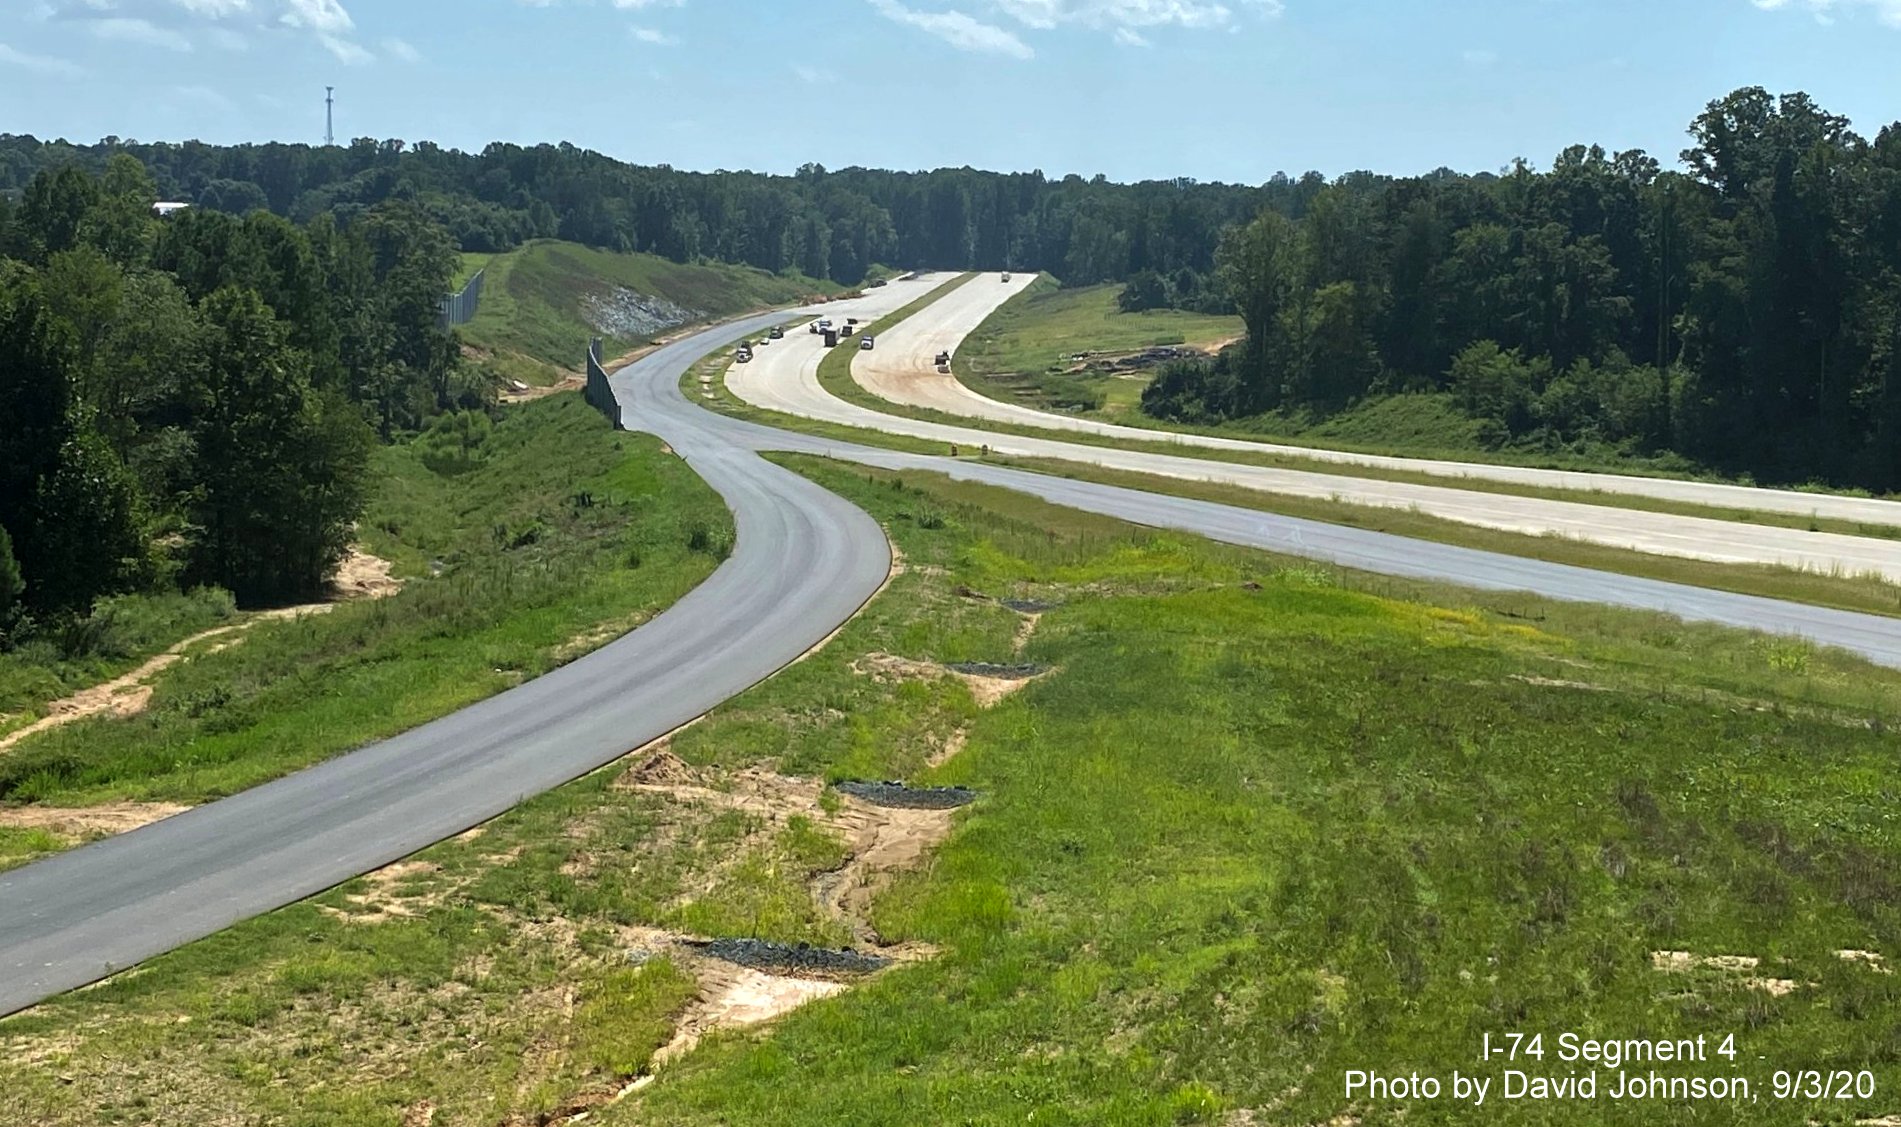 Image of ramp from NC 74 Winston-Salem Northern Beltway to US 421/Salem Parkway, by David Johnson September 2020